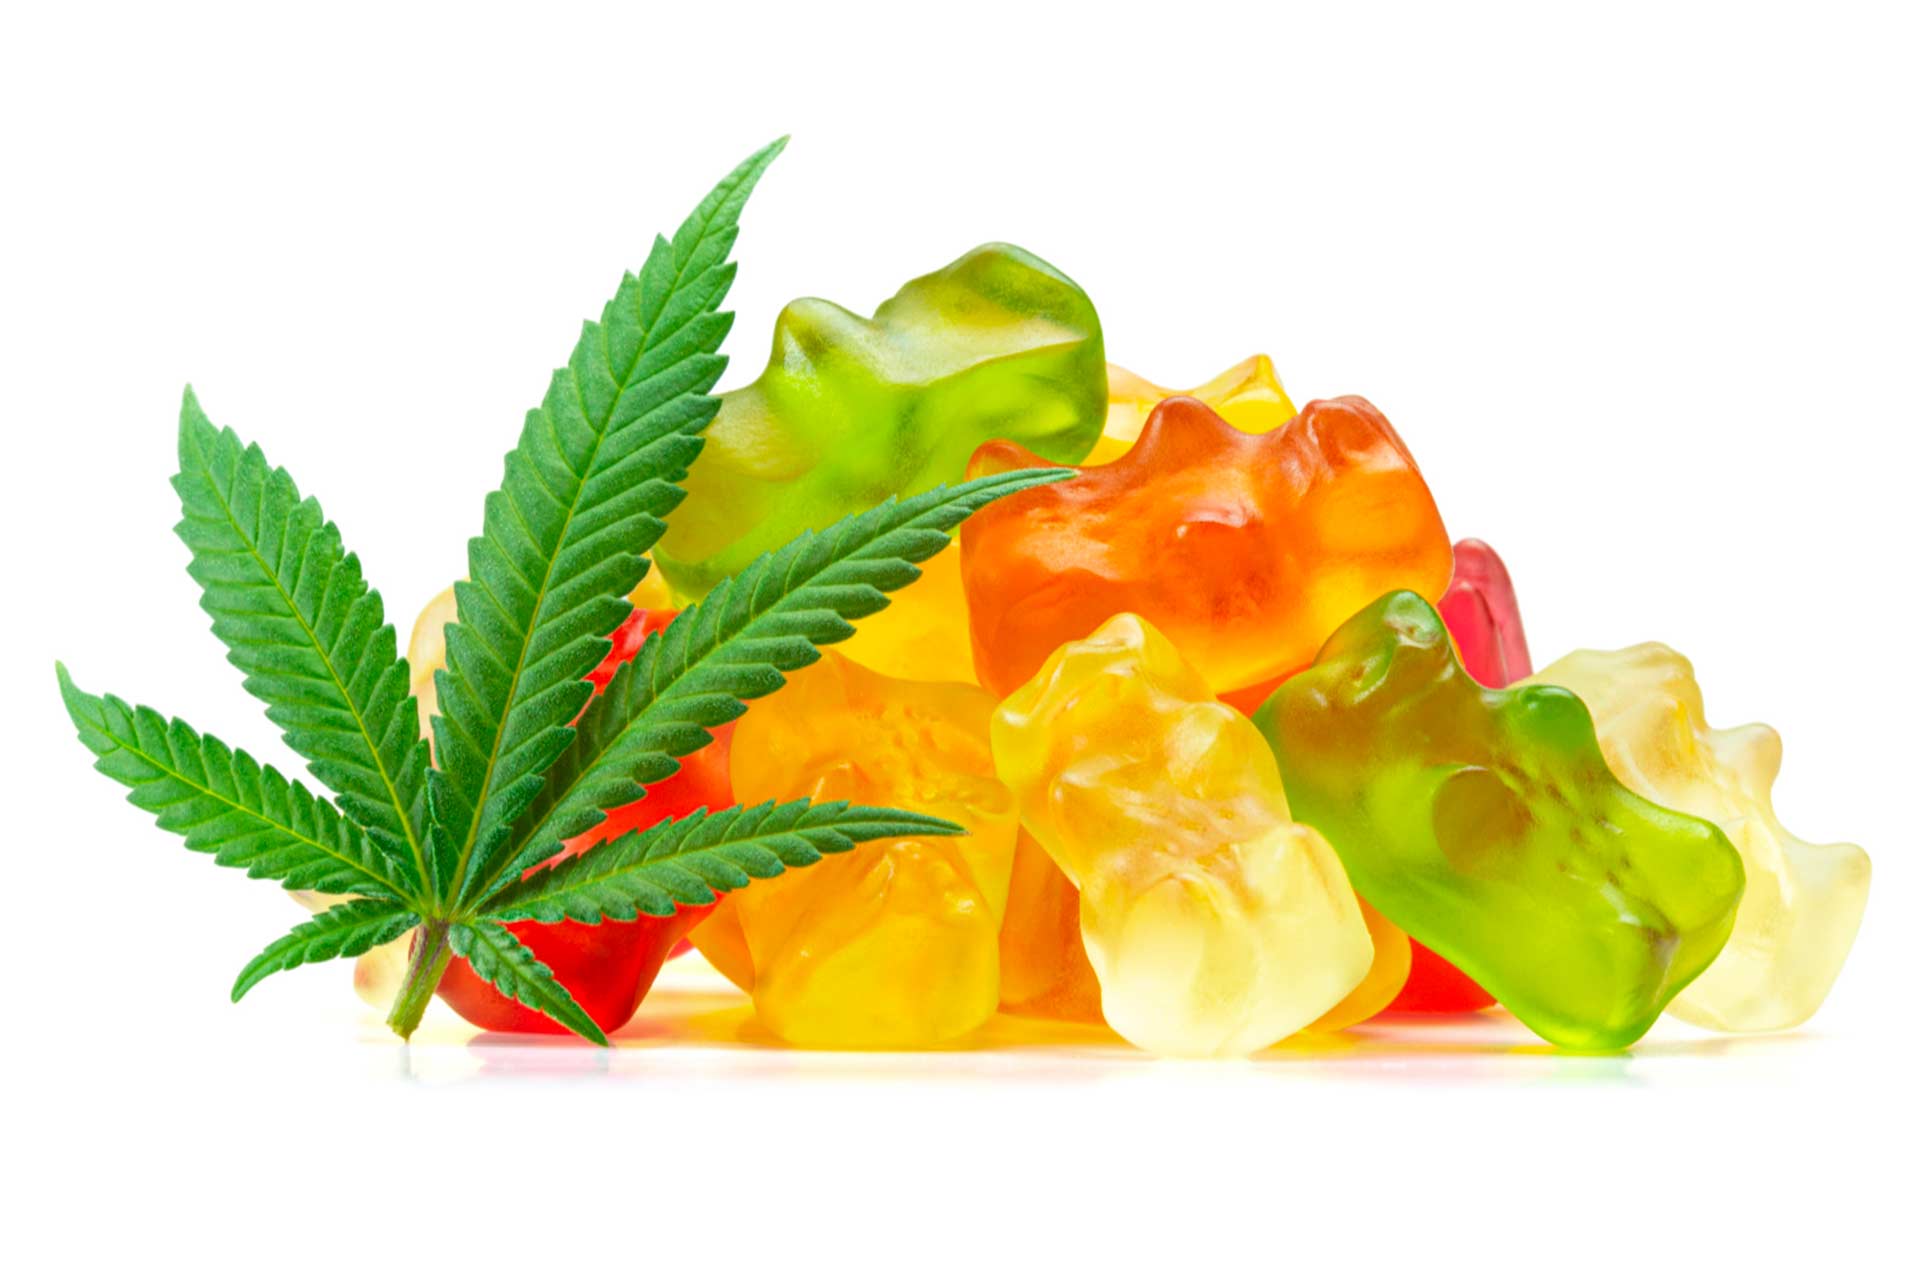 Colorful cannabis edible gummies stacked next to a cannabis leaf.